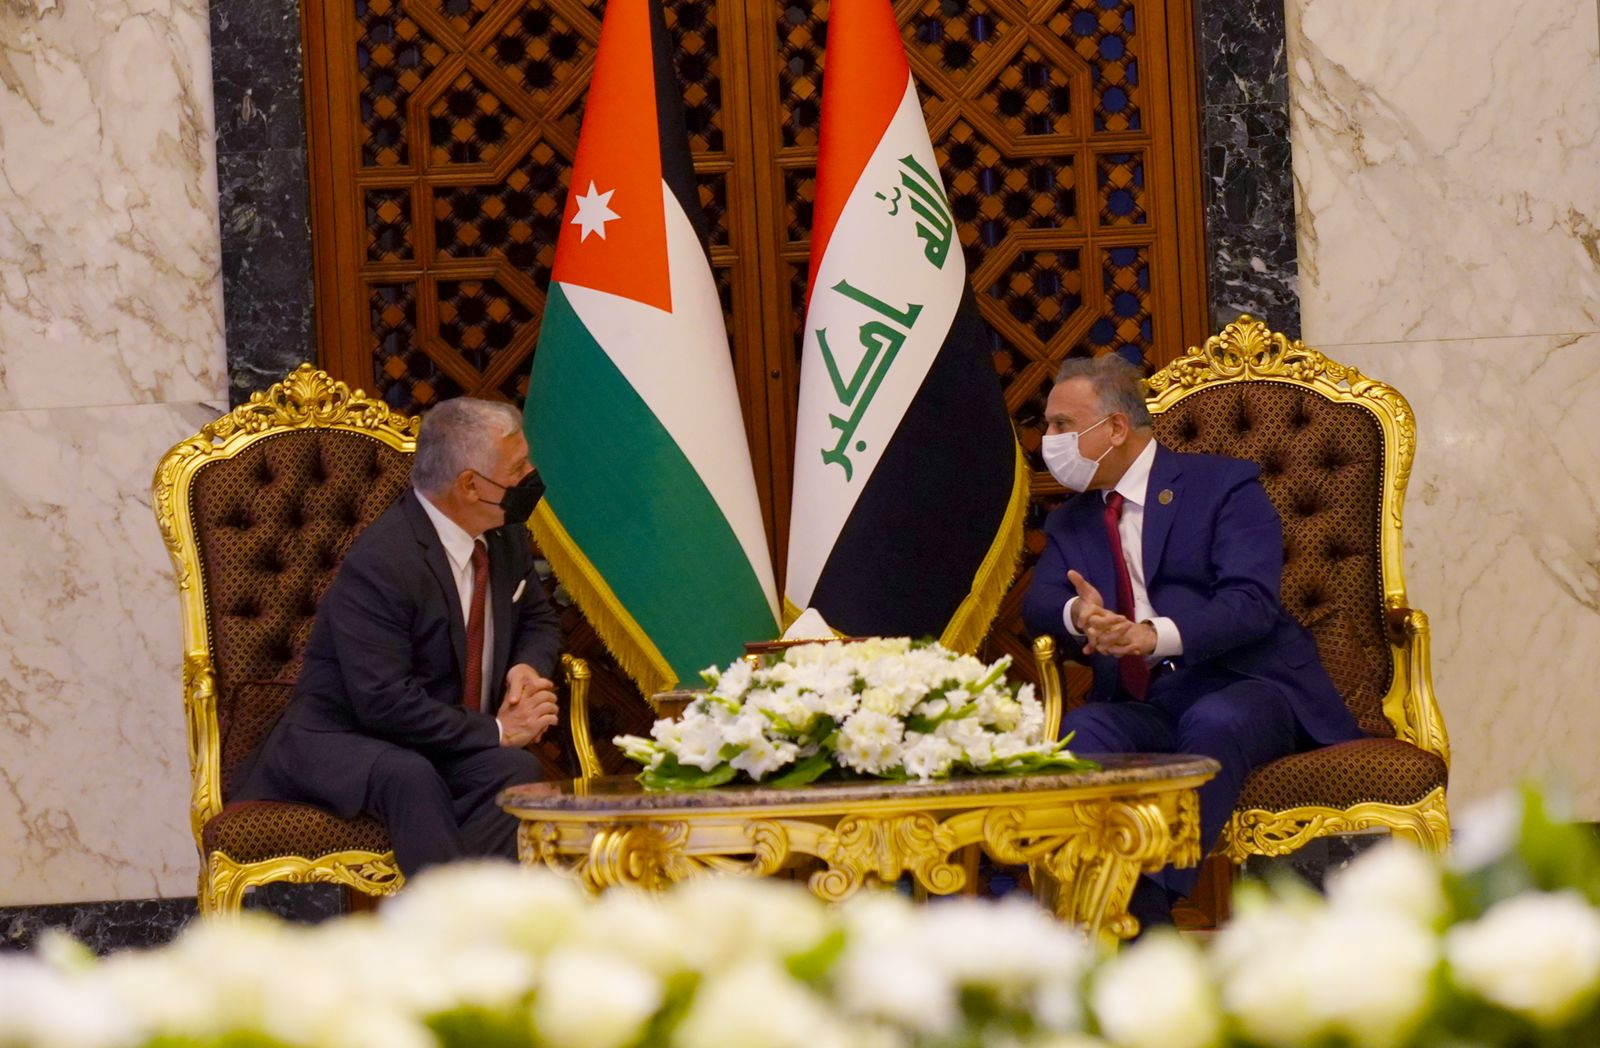 Iraqi Prime Minister Mustafa al-Kadhimi meets with Jordan's King Abdullah II, ahead of the Baghdad summit in Baghdad